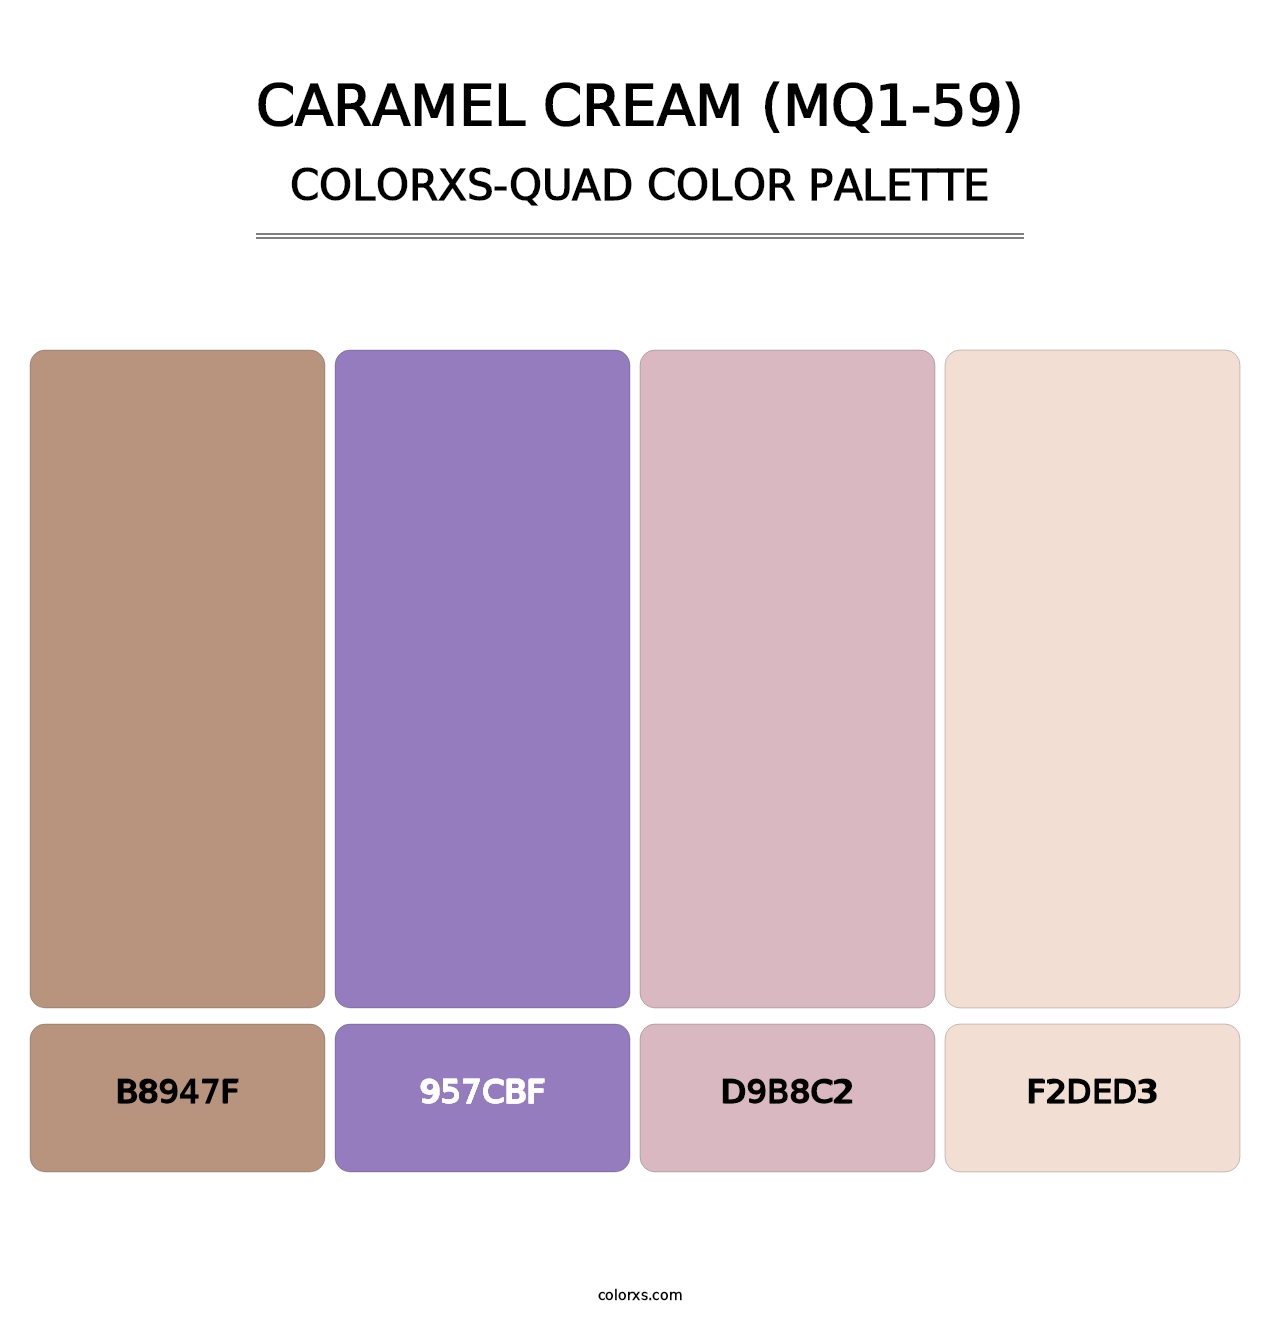 Caramel Cream (MQ1-59) - Colorxs Quad Palette